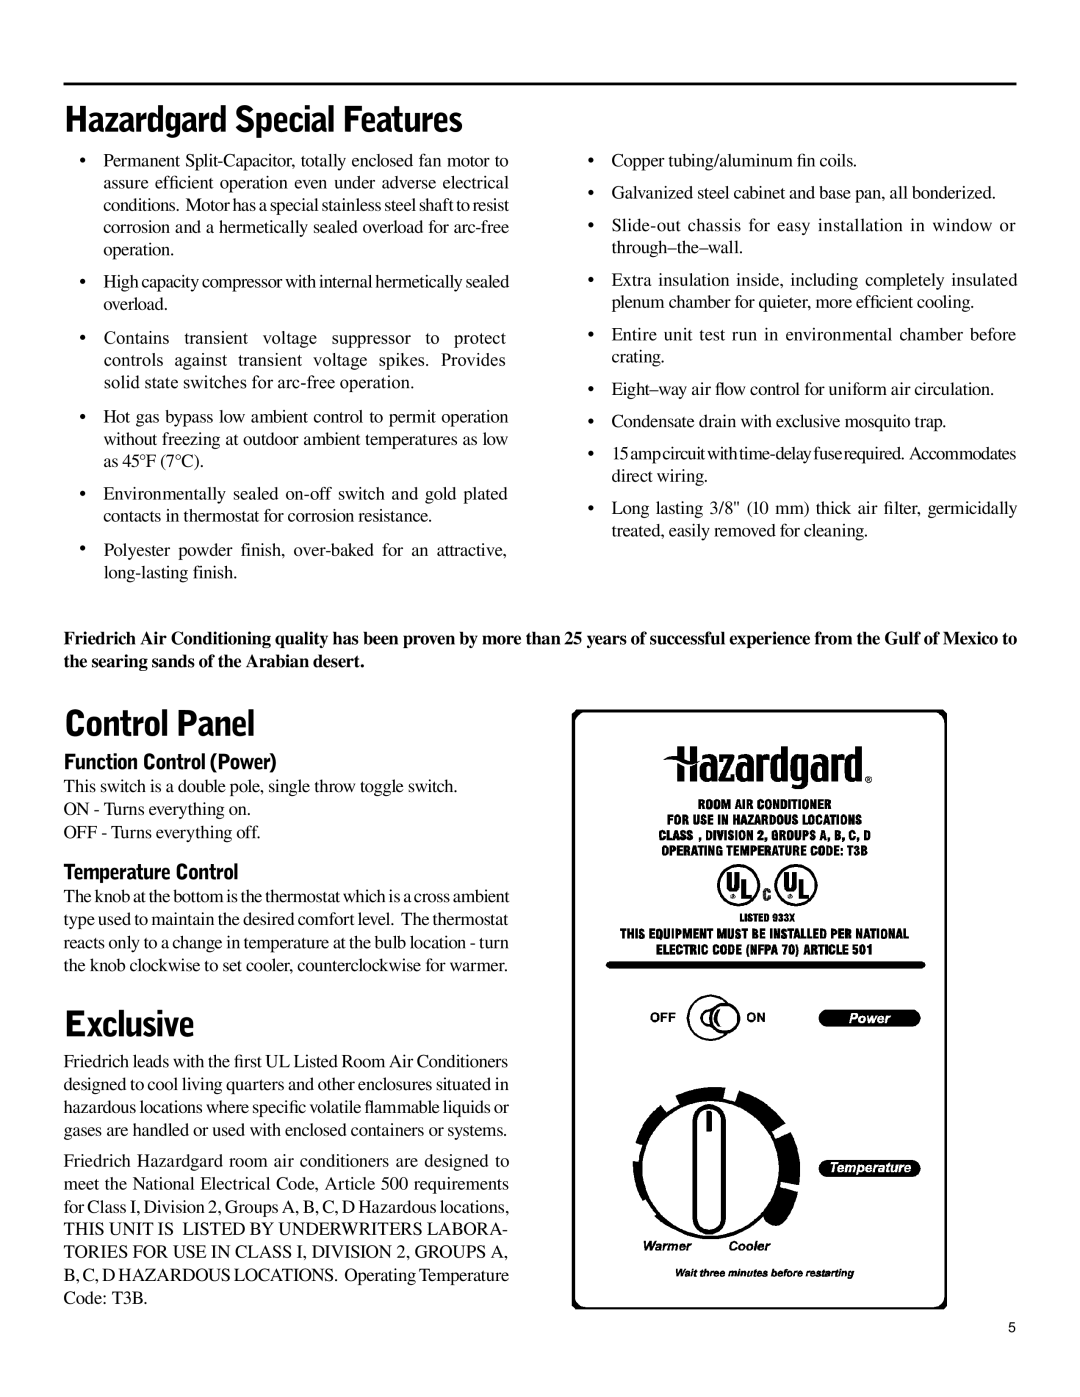 Friedrich SH15 Hazardgard Special Features, Control Panel, Exclusive, Function Control Power, Temperature Control 